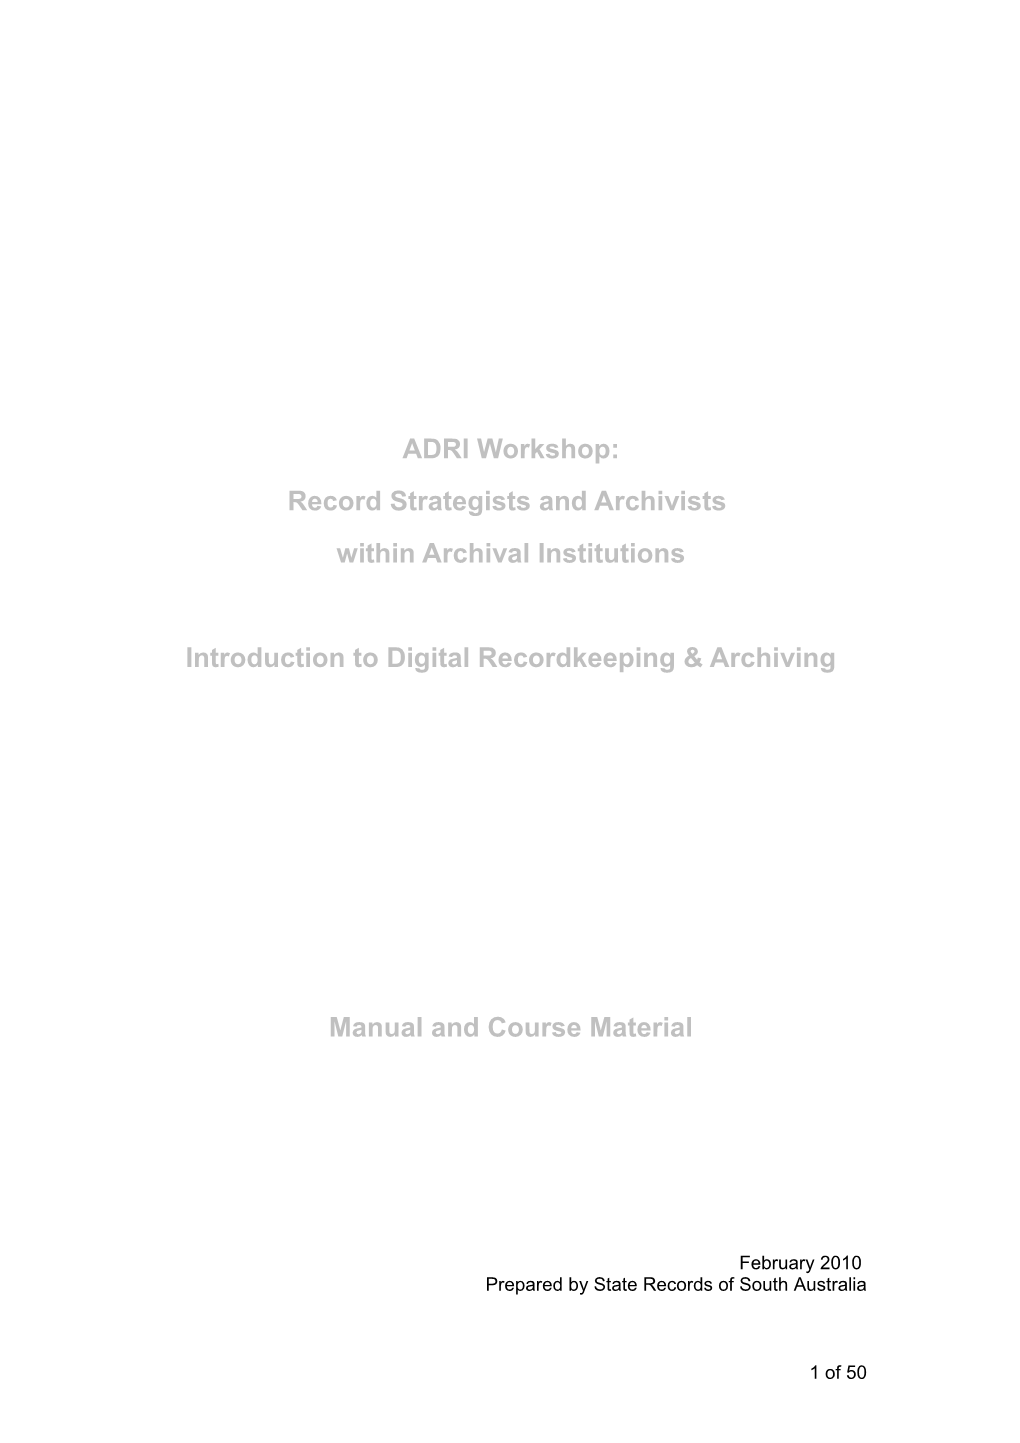 ADRI Workshop - Participant Manual 2010